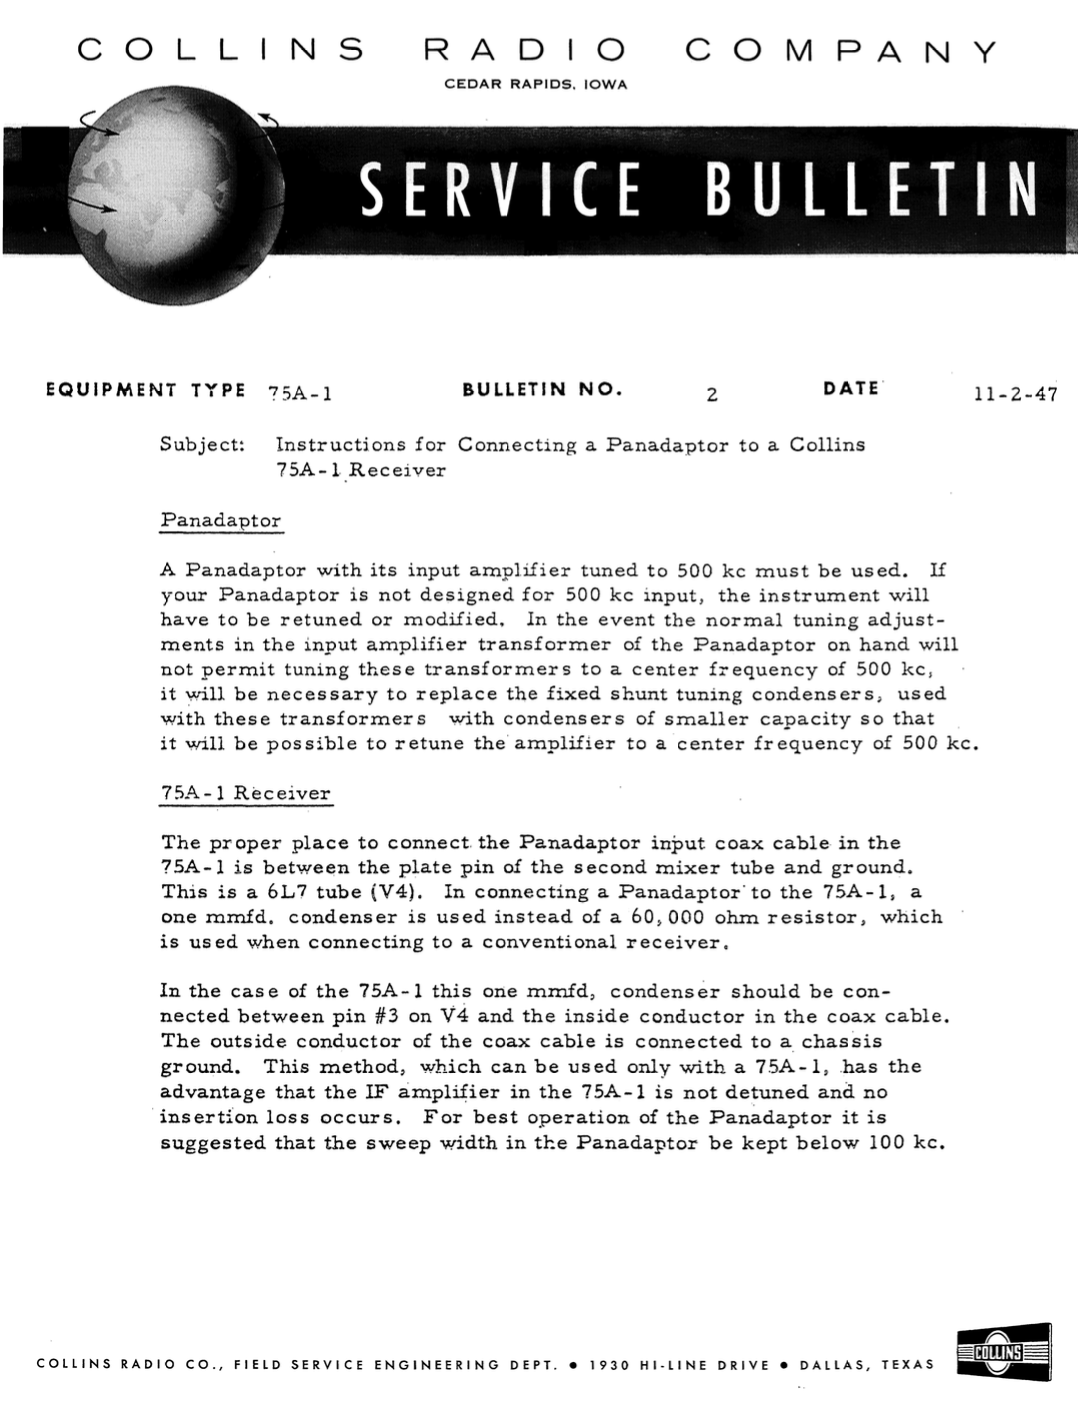 Collins 75A-1 Amateur Receiver - Service Bulletin Number 2 (1947-11)